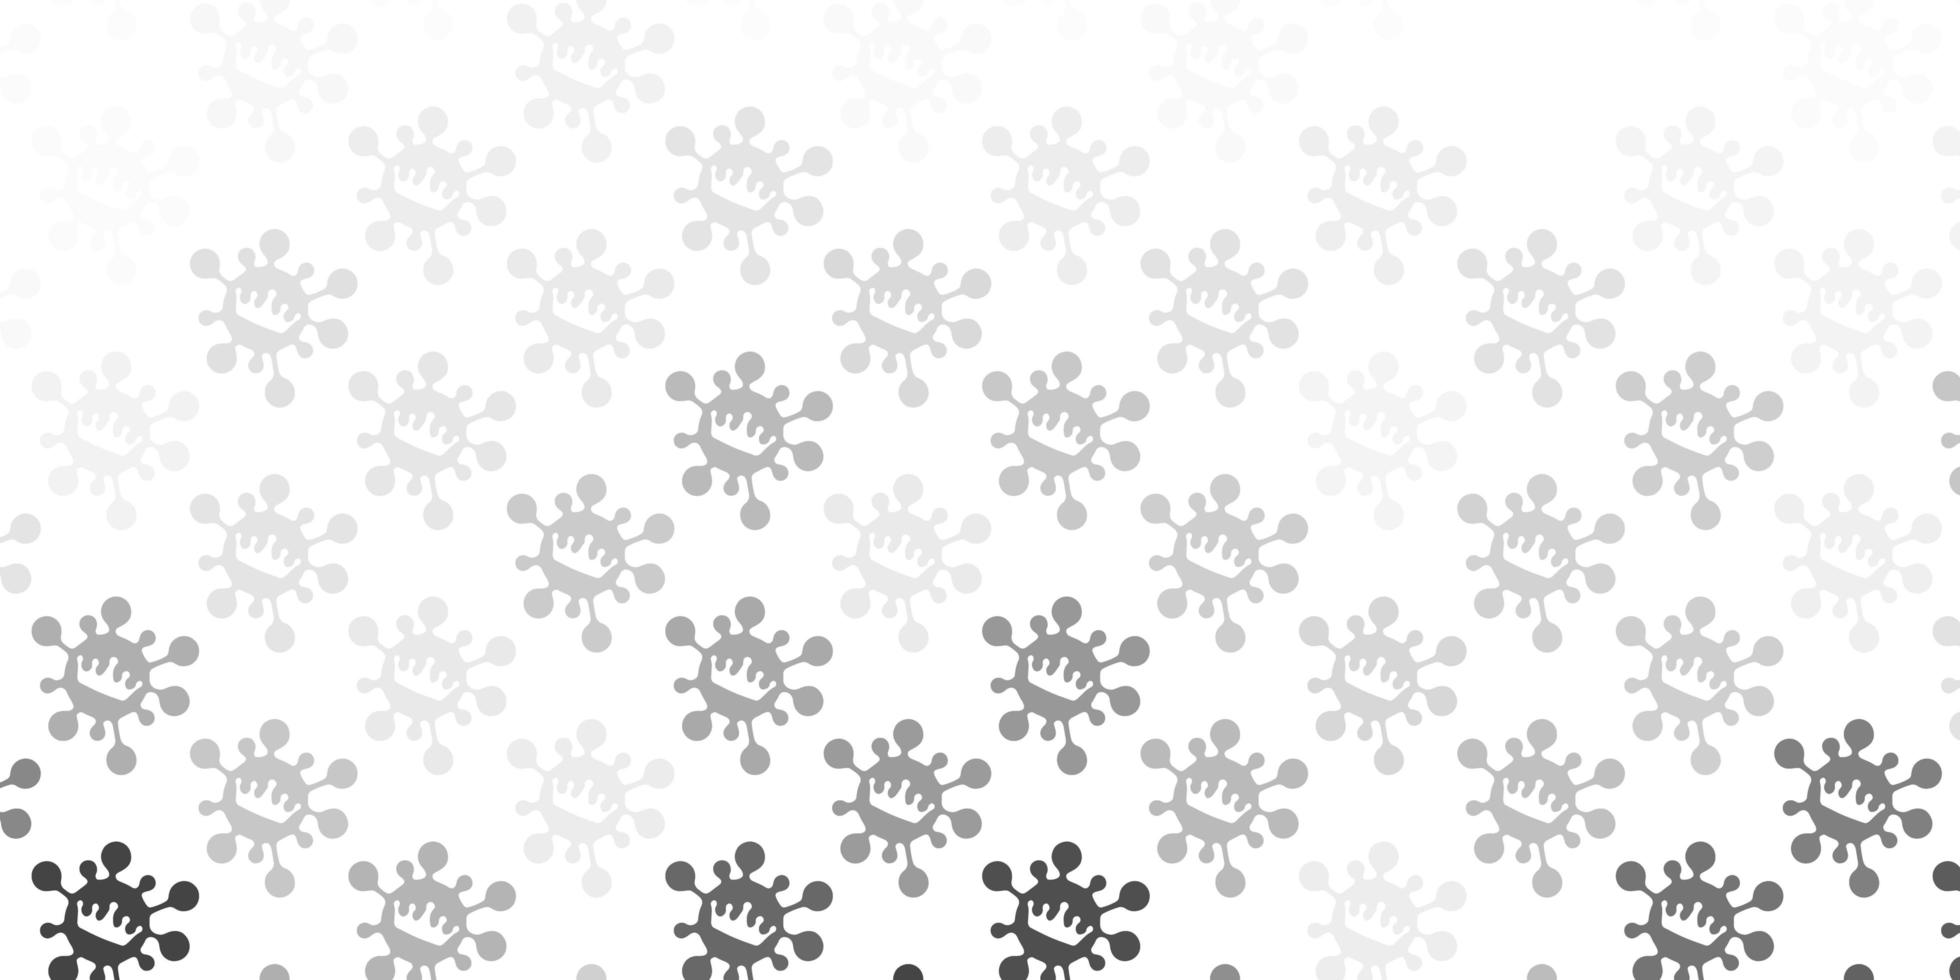 Light gray vector backdrop with virus symbols